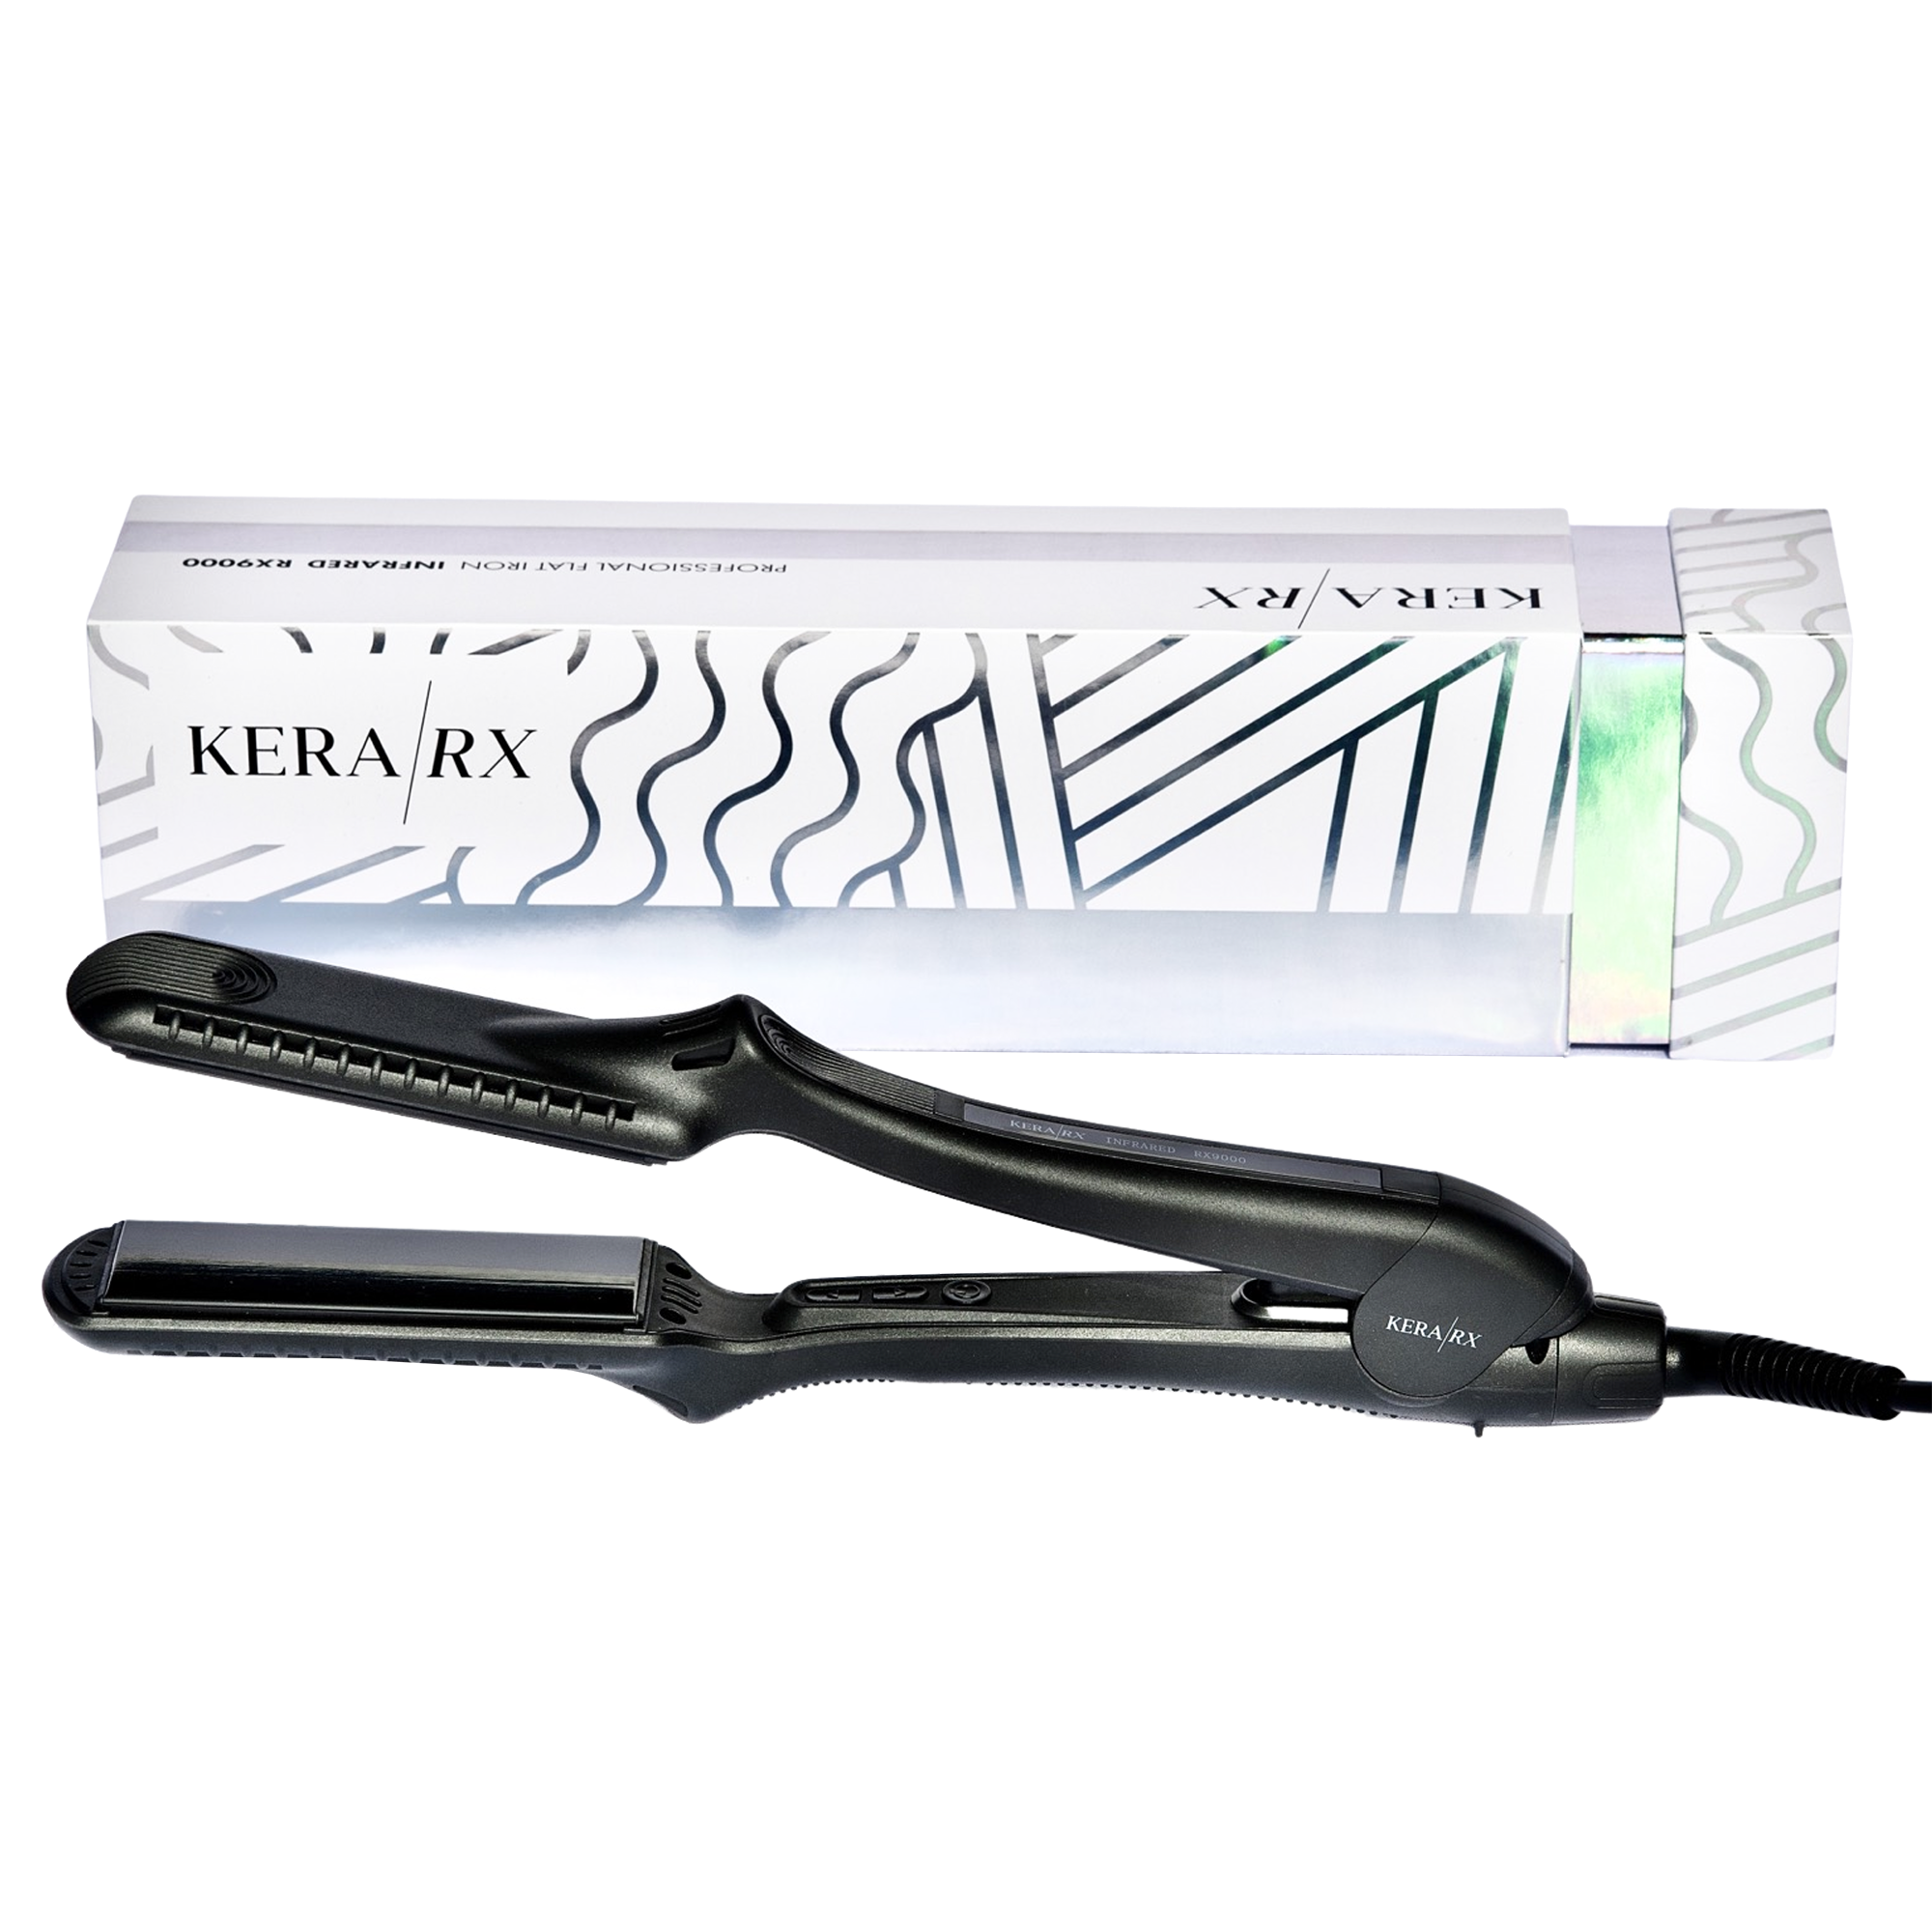 KeraRx Professional Flat Iron | INFRARED RX 9000 | Kera/RX Haircare